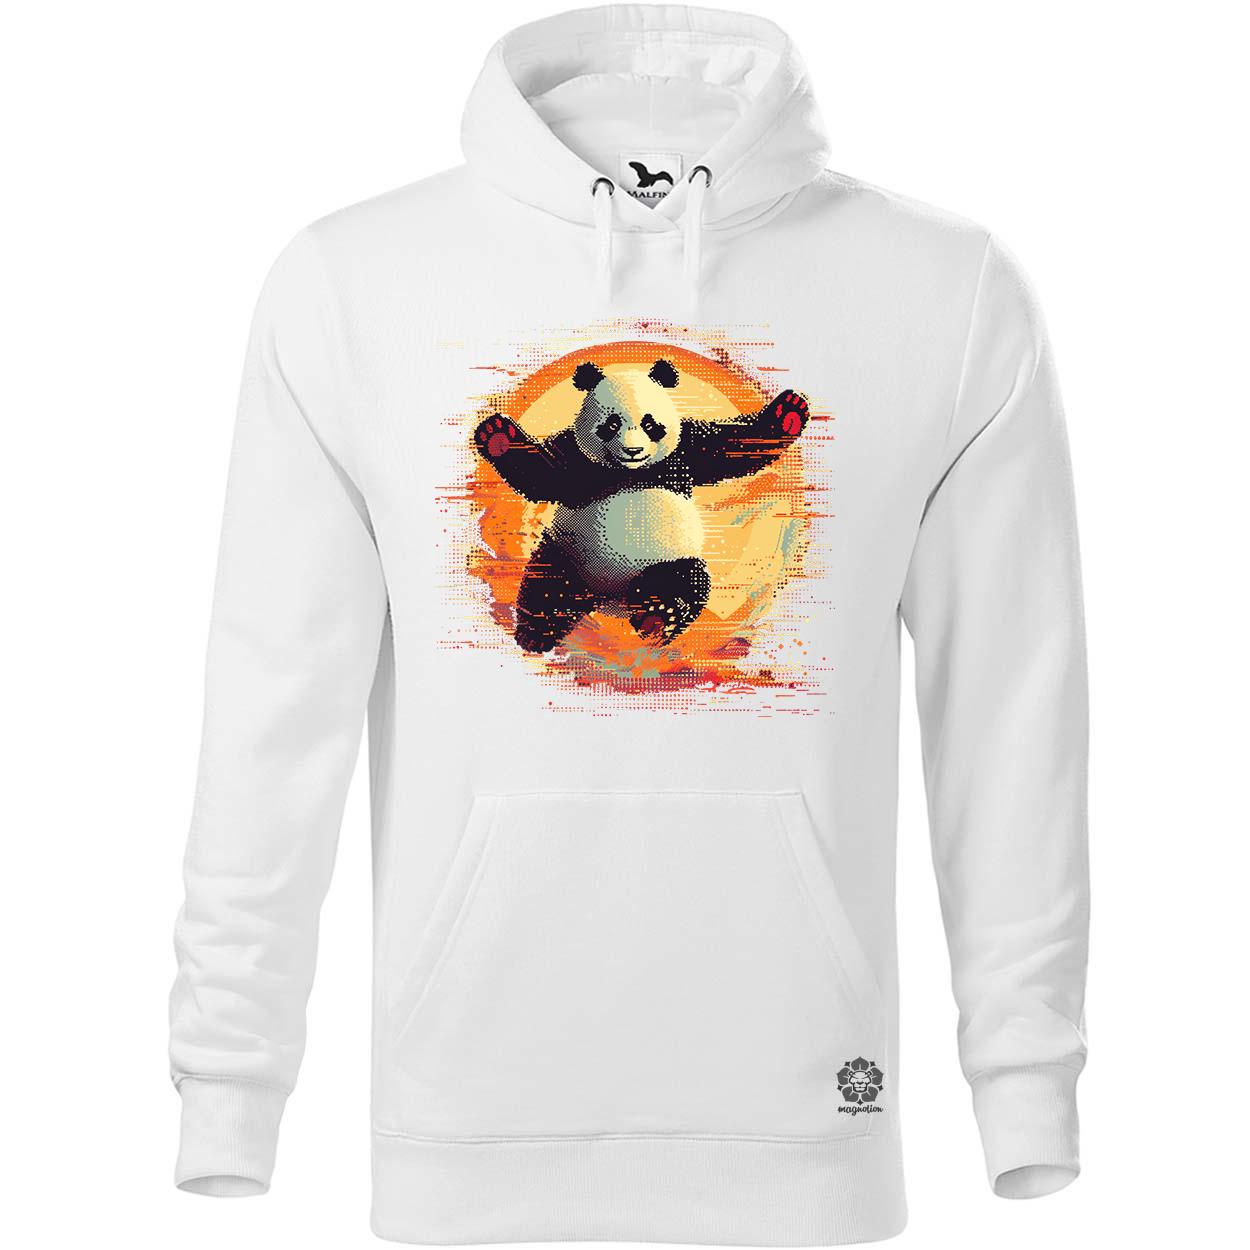 Pixelart kung fu panda v1